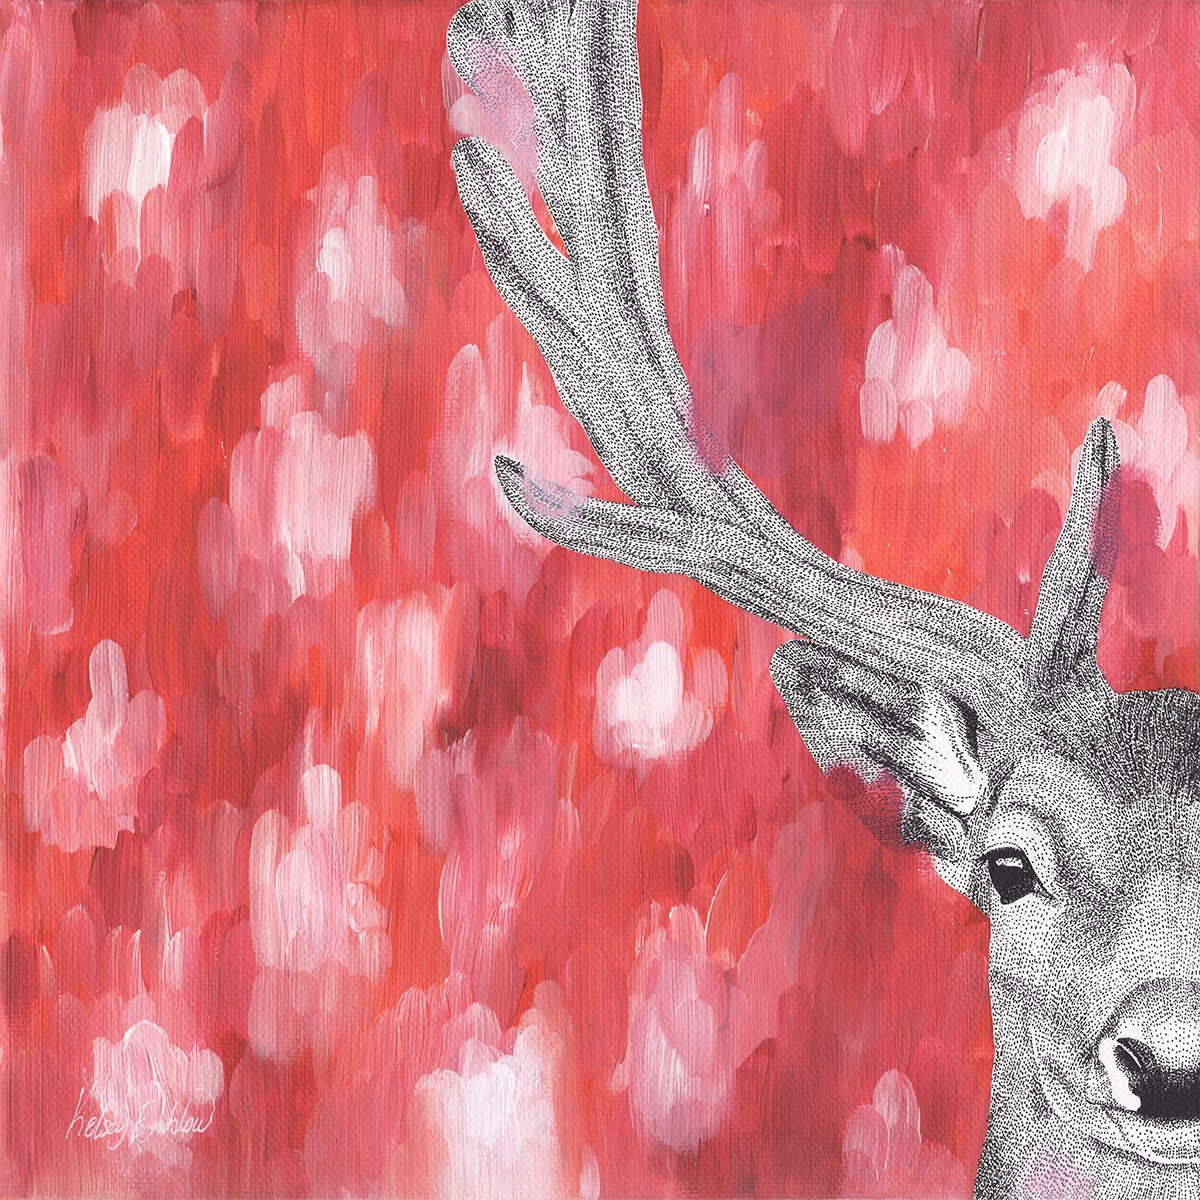 Peekaboo Fallow Deer Painting on Canvas by Kelsey Emblow